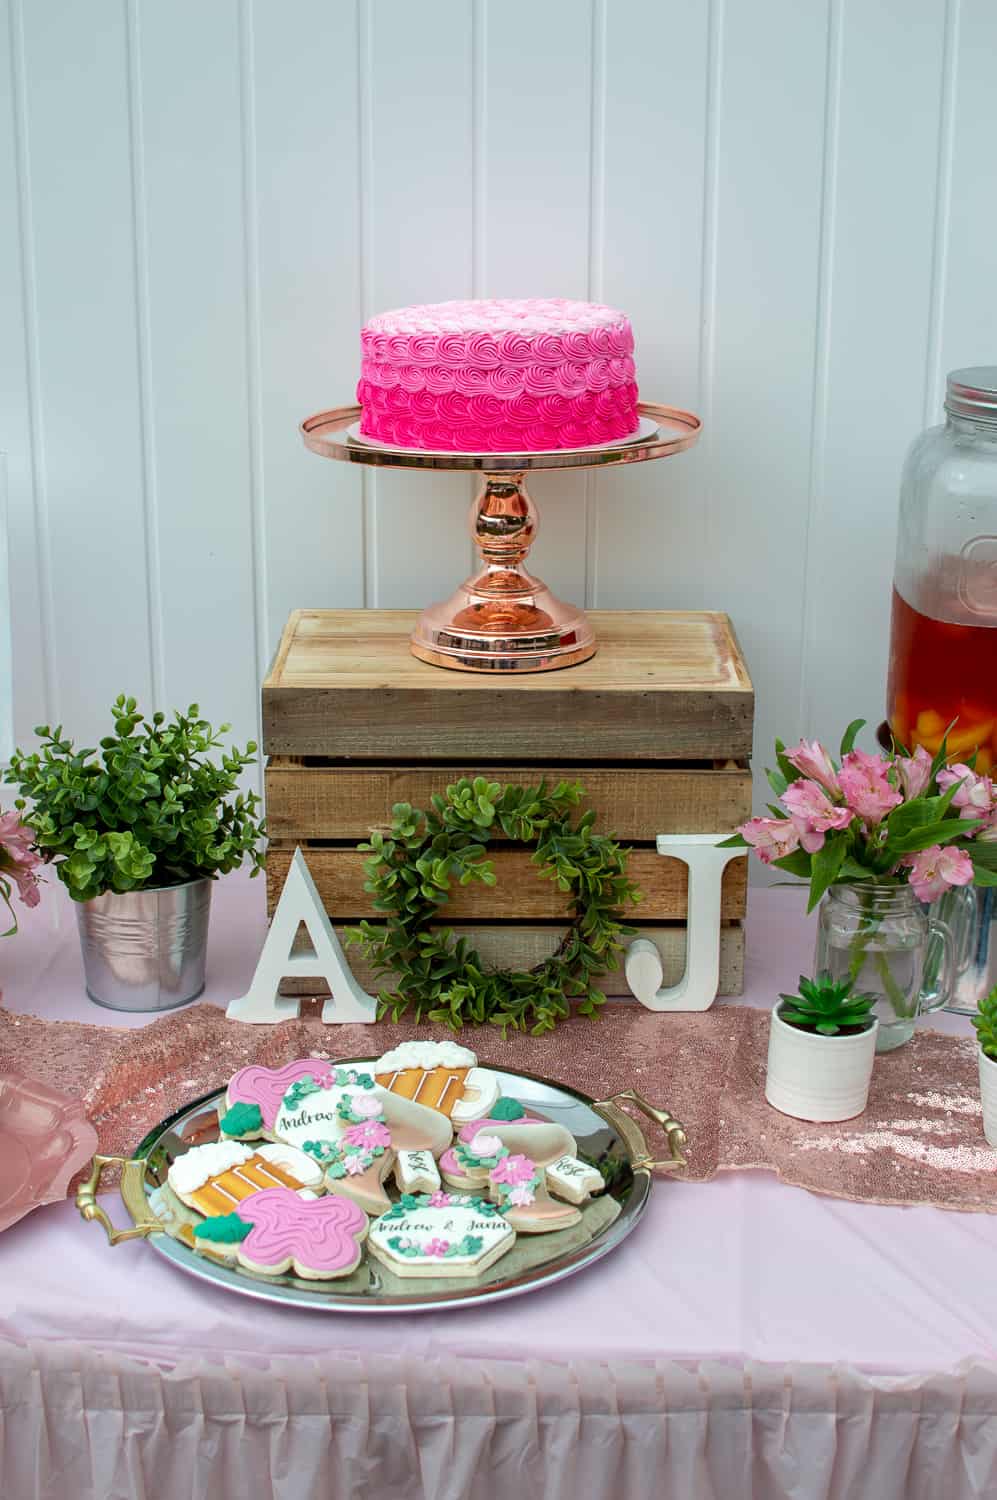 Pink rosette cake on Amalfi Decor cake stand and custom sugar cookies